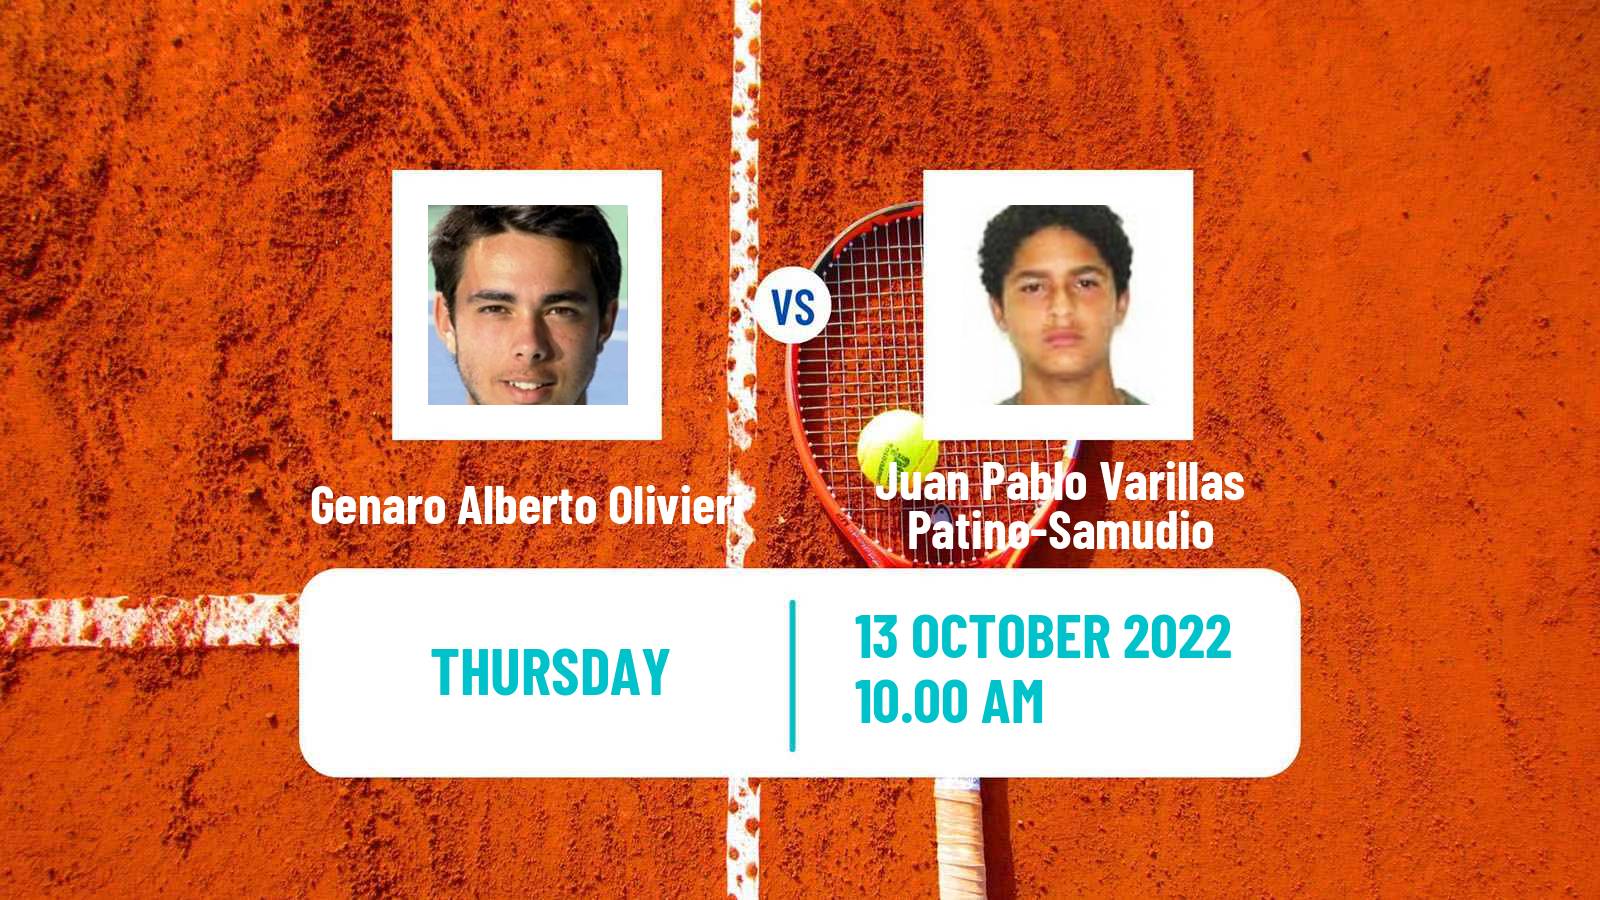 Tennis ATP Challenger Genaro Alberto Olivieri - Juan Pablo Varillas Patino-Samudio